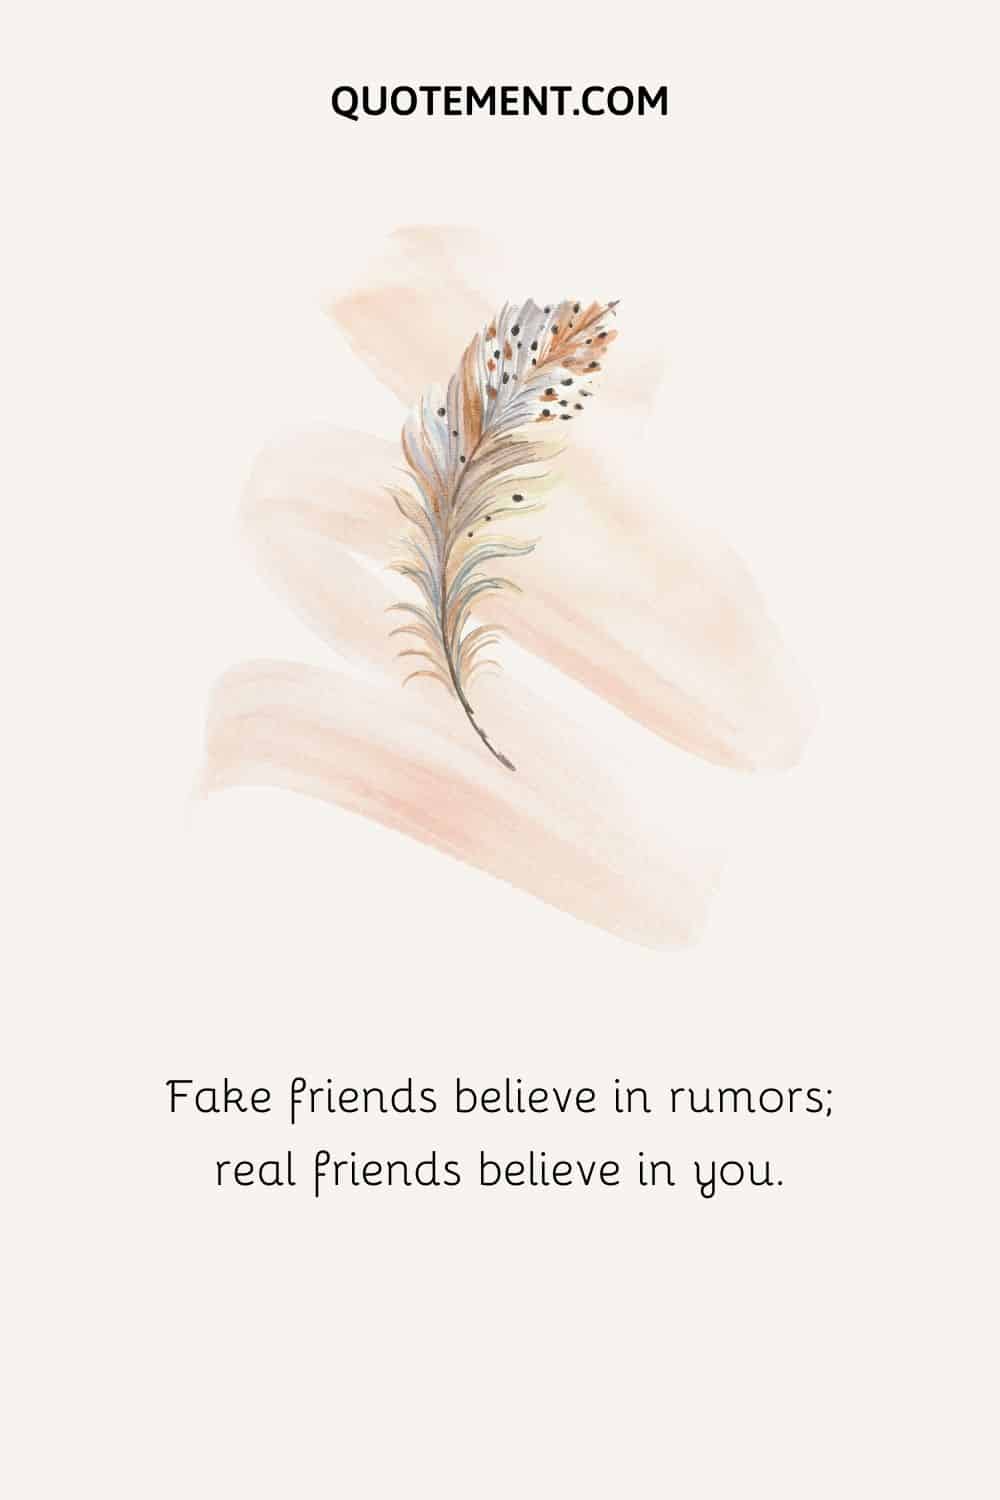 Fake friends believe in rumors; real friends believe in you.